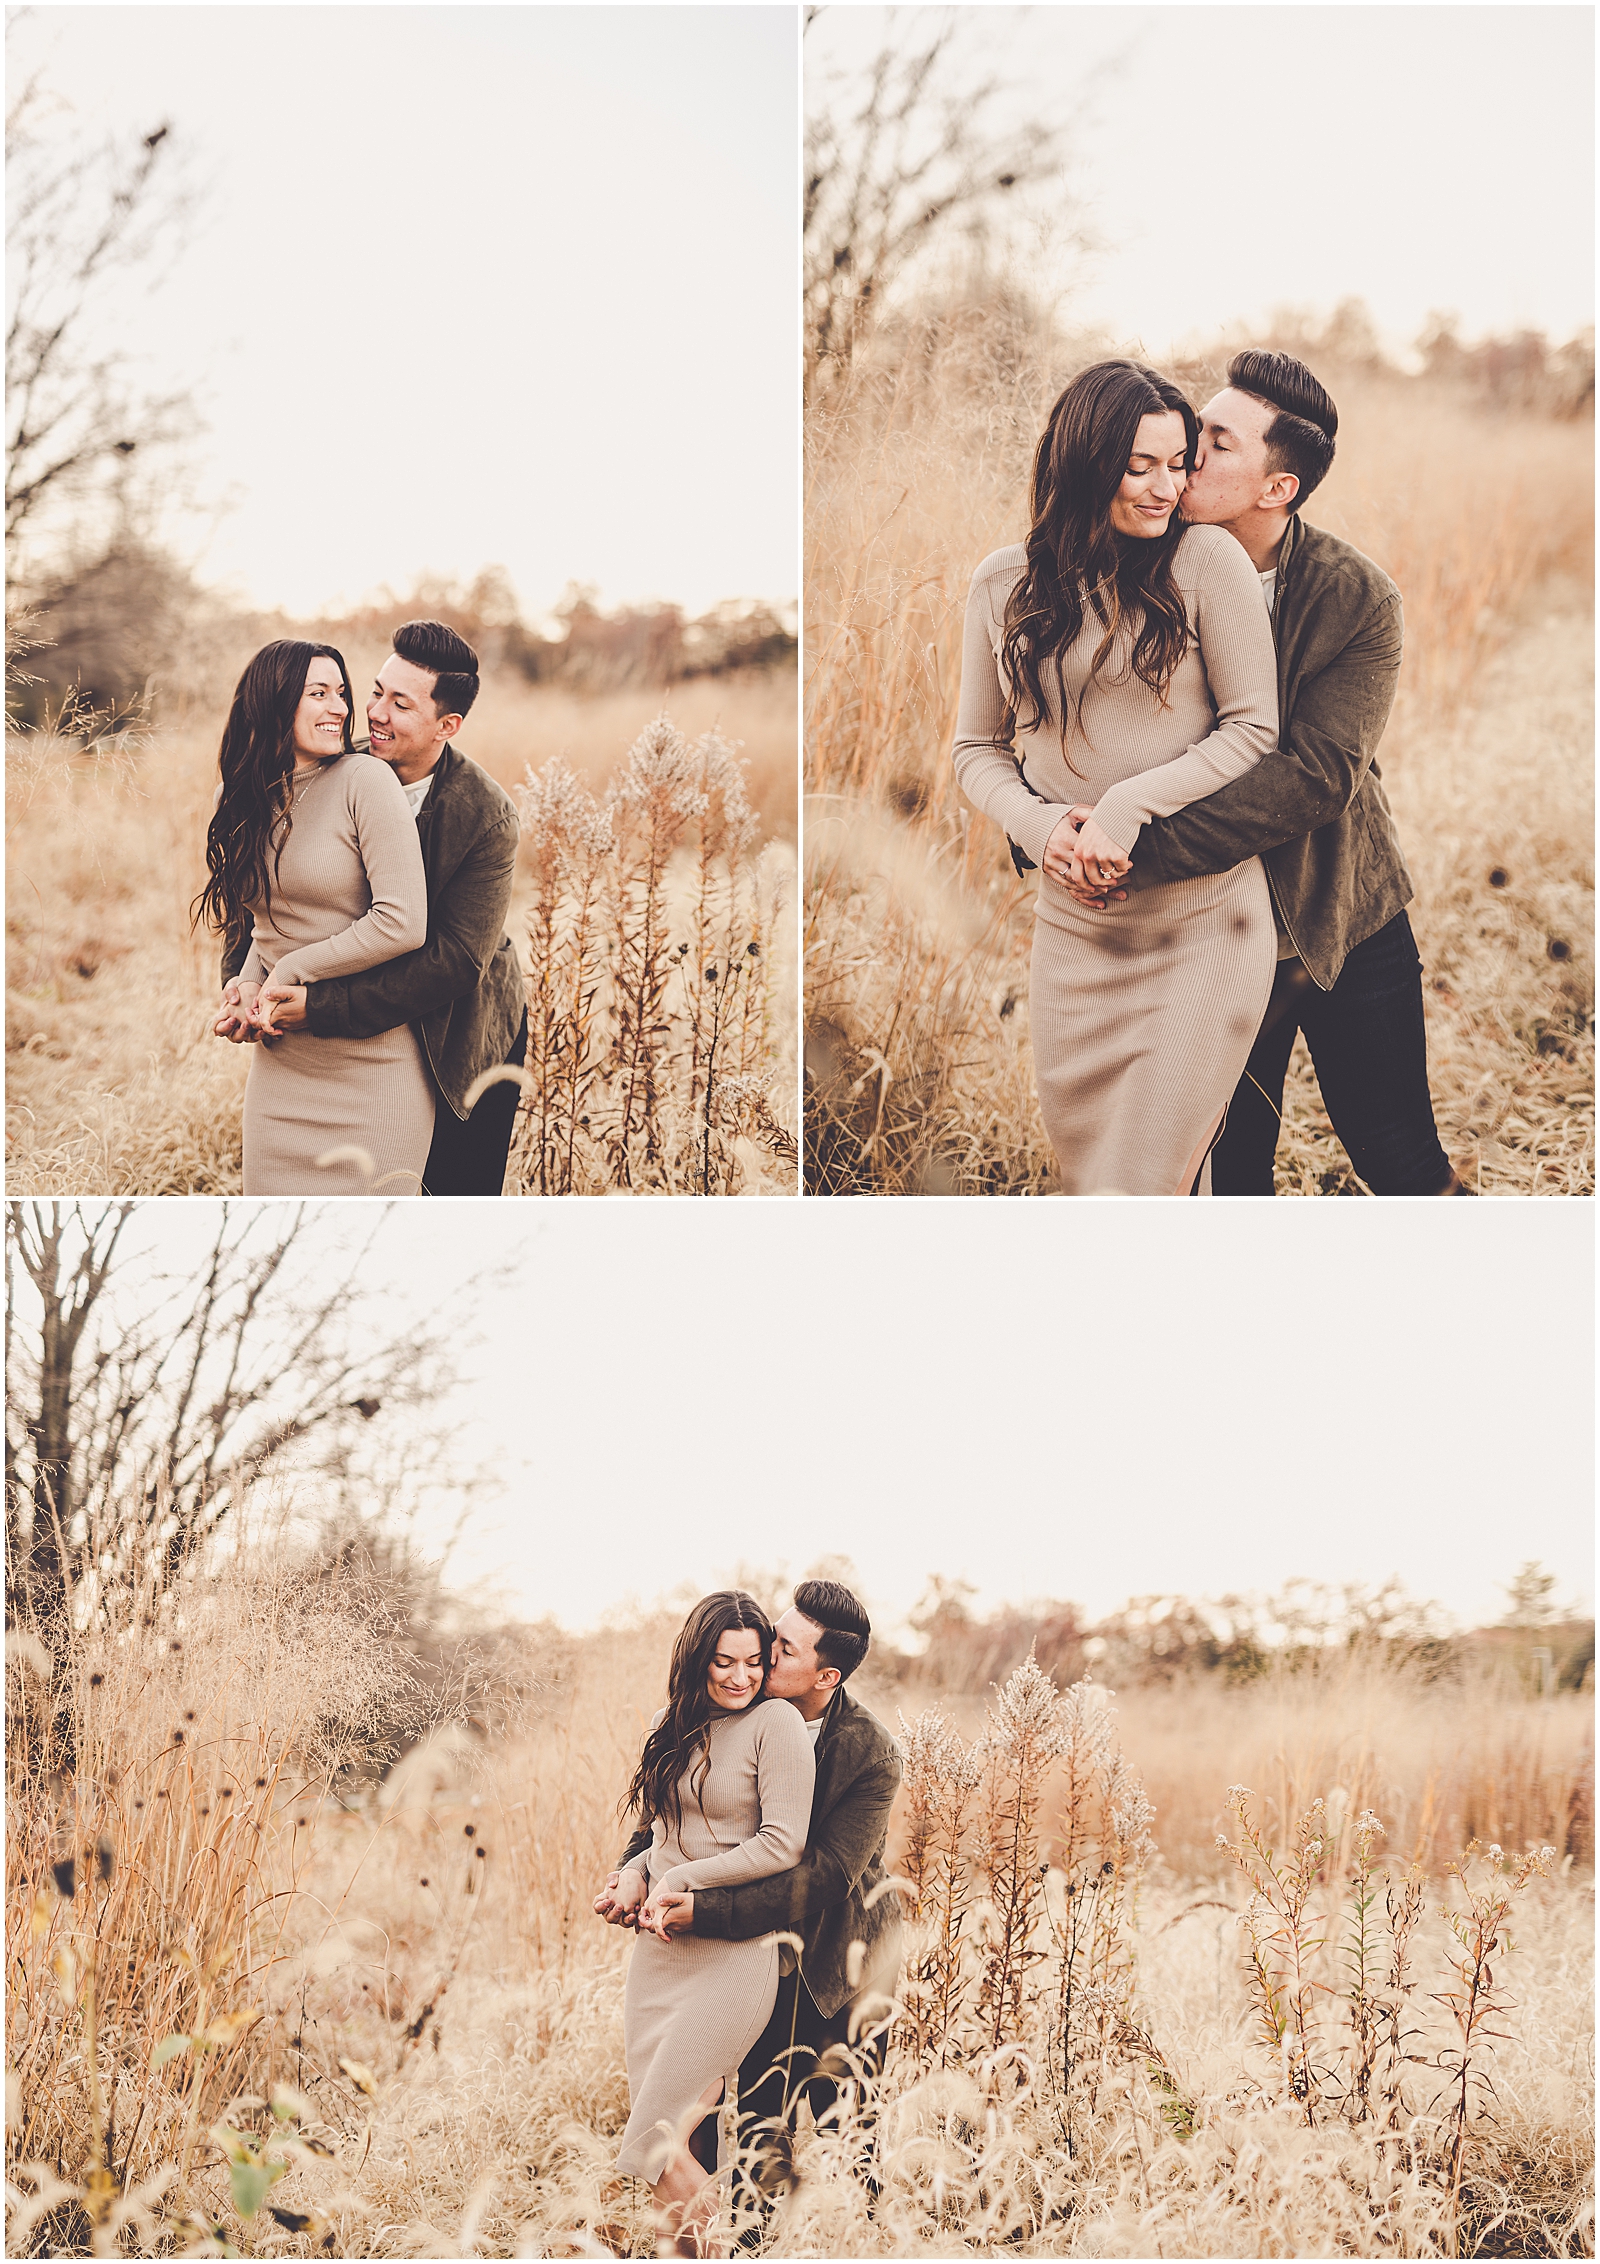 Alyssa & Paul's engagement photos at the Kankakee River State Park in Bourbonnais with Chicago wedding photographer Kara Evans Photographer.